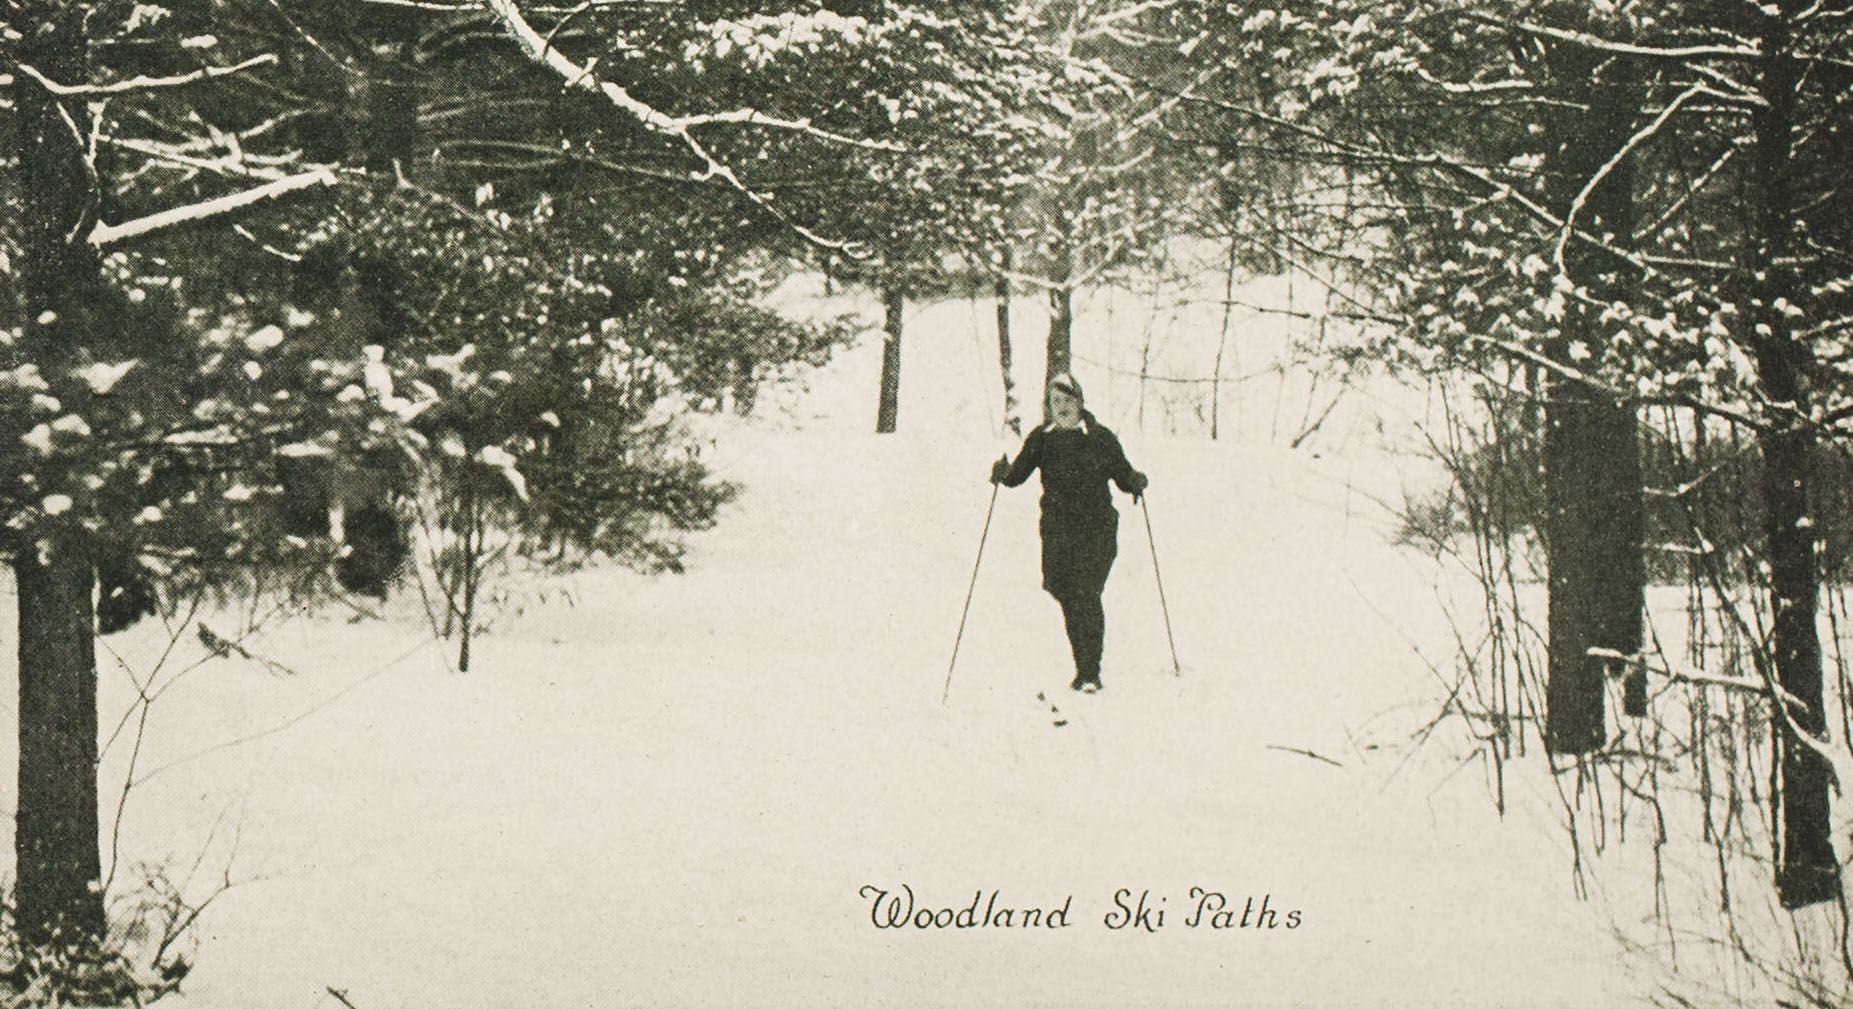 Woodland Ski Paths (1939)